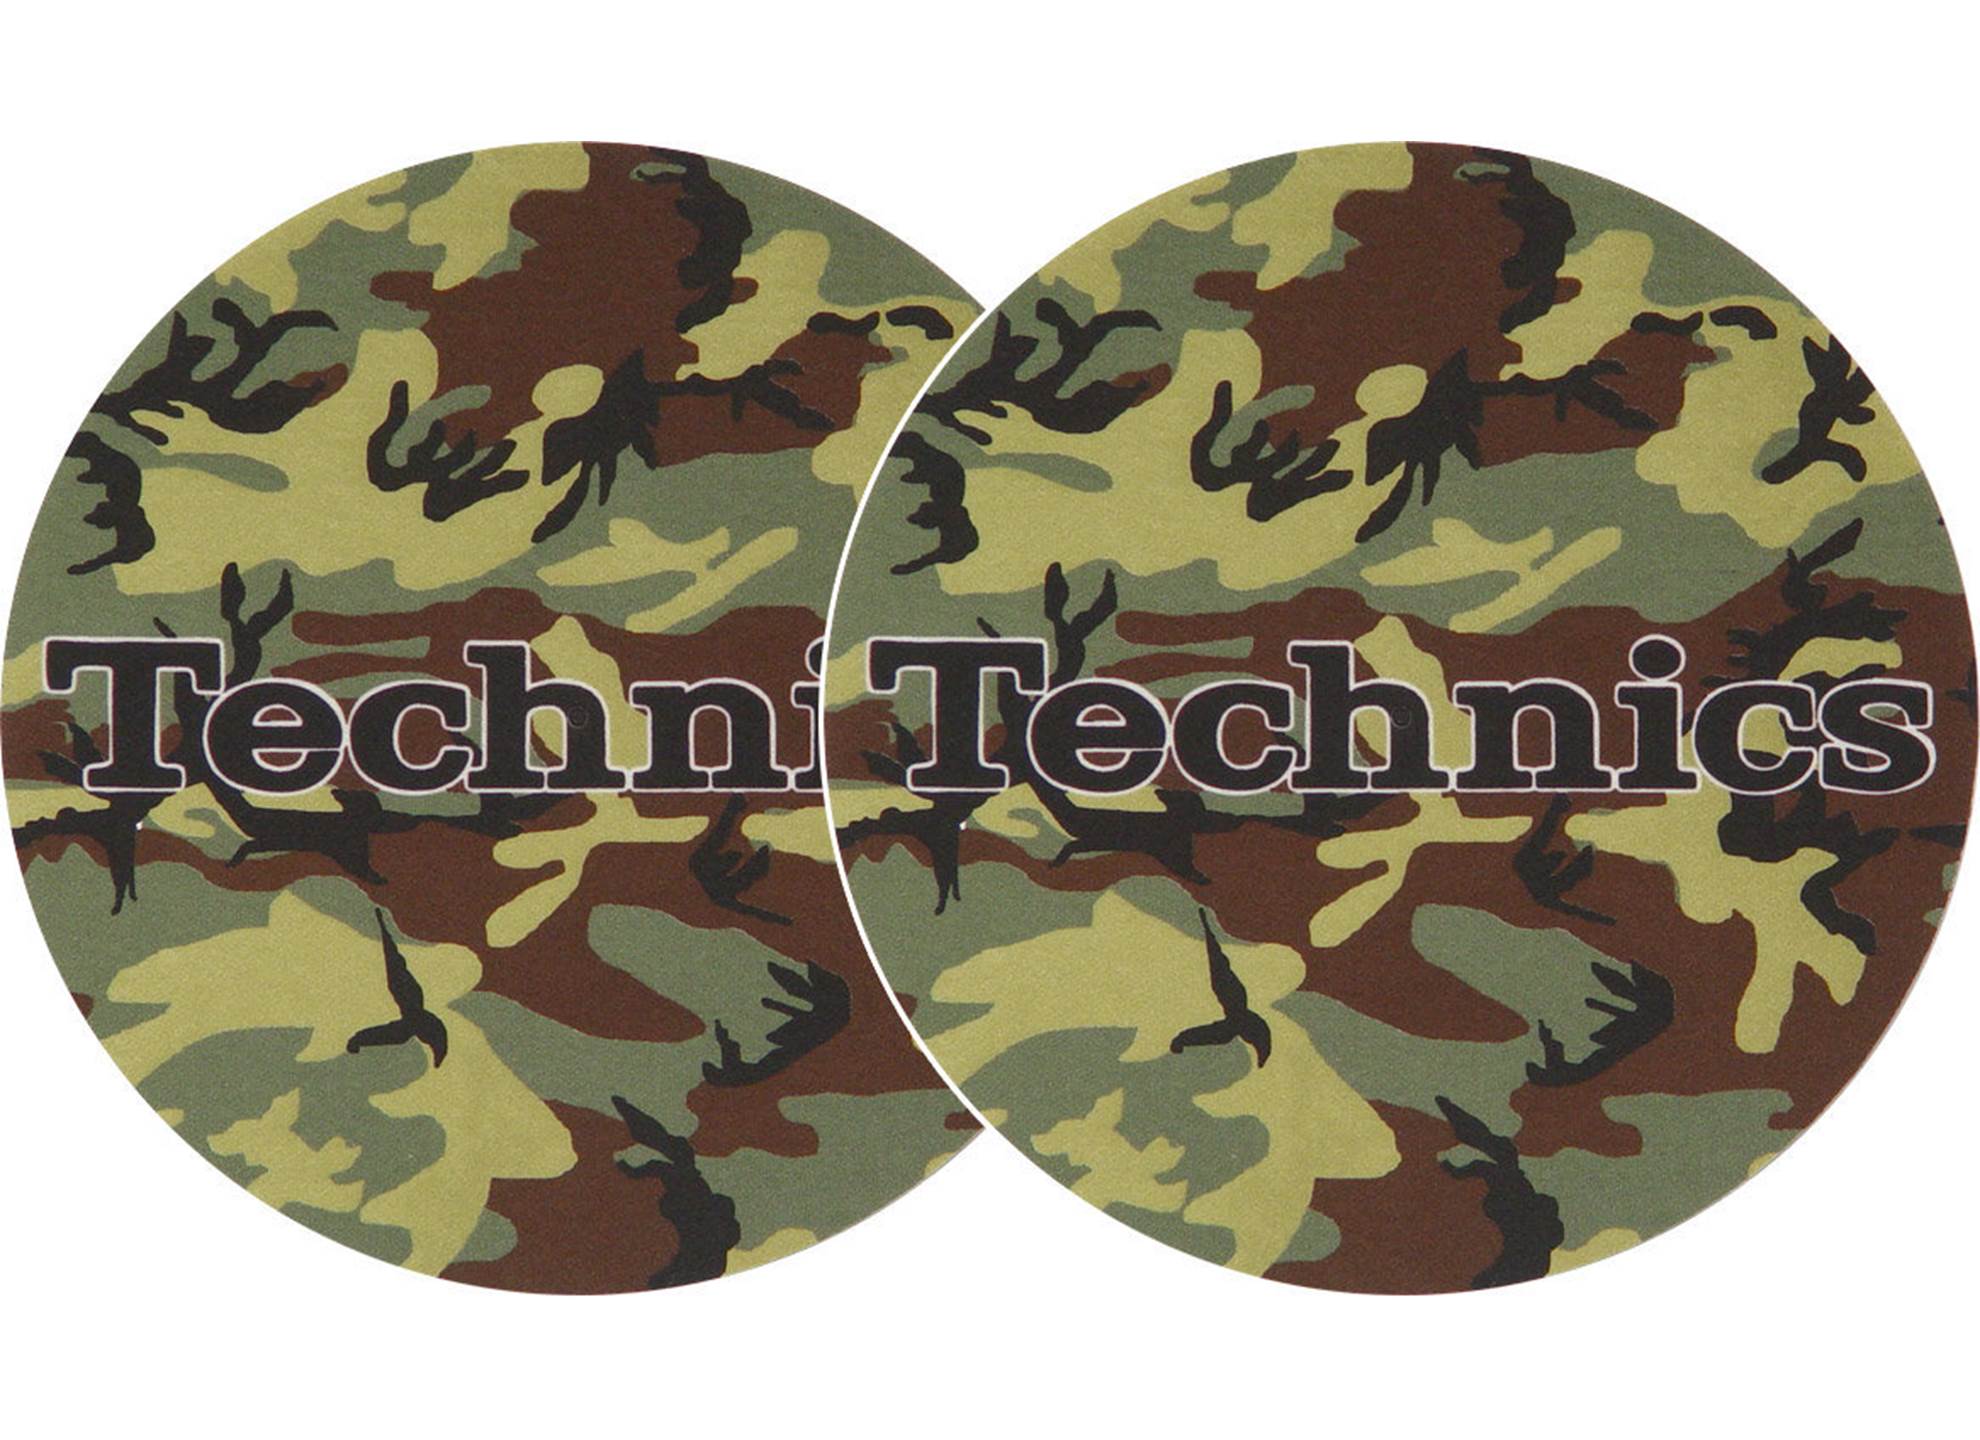 Technics Army